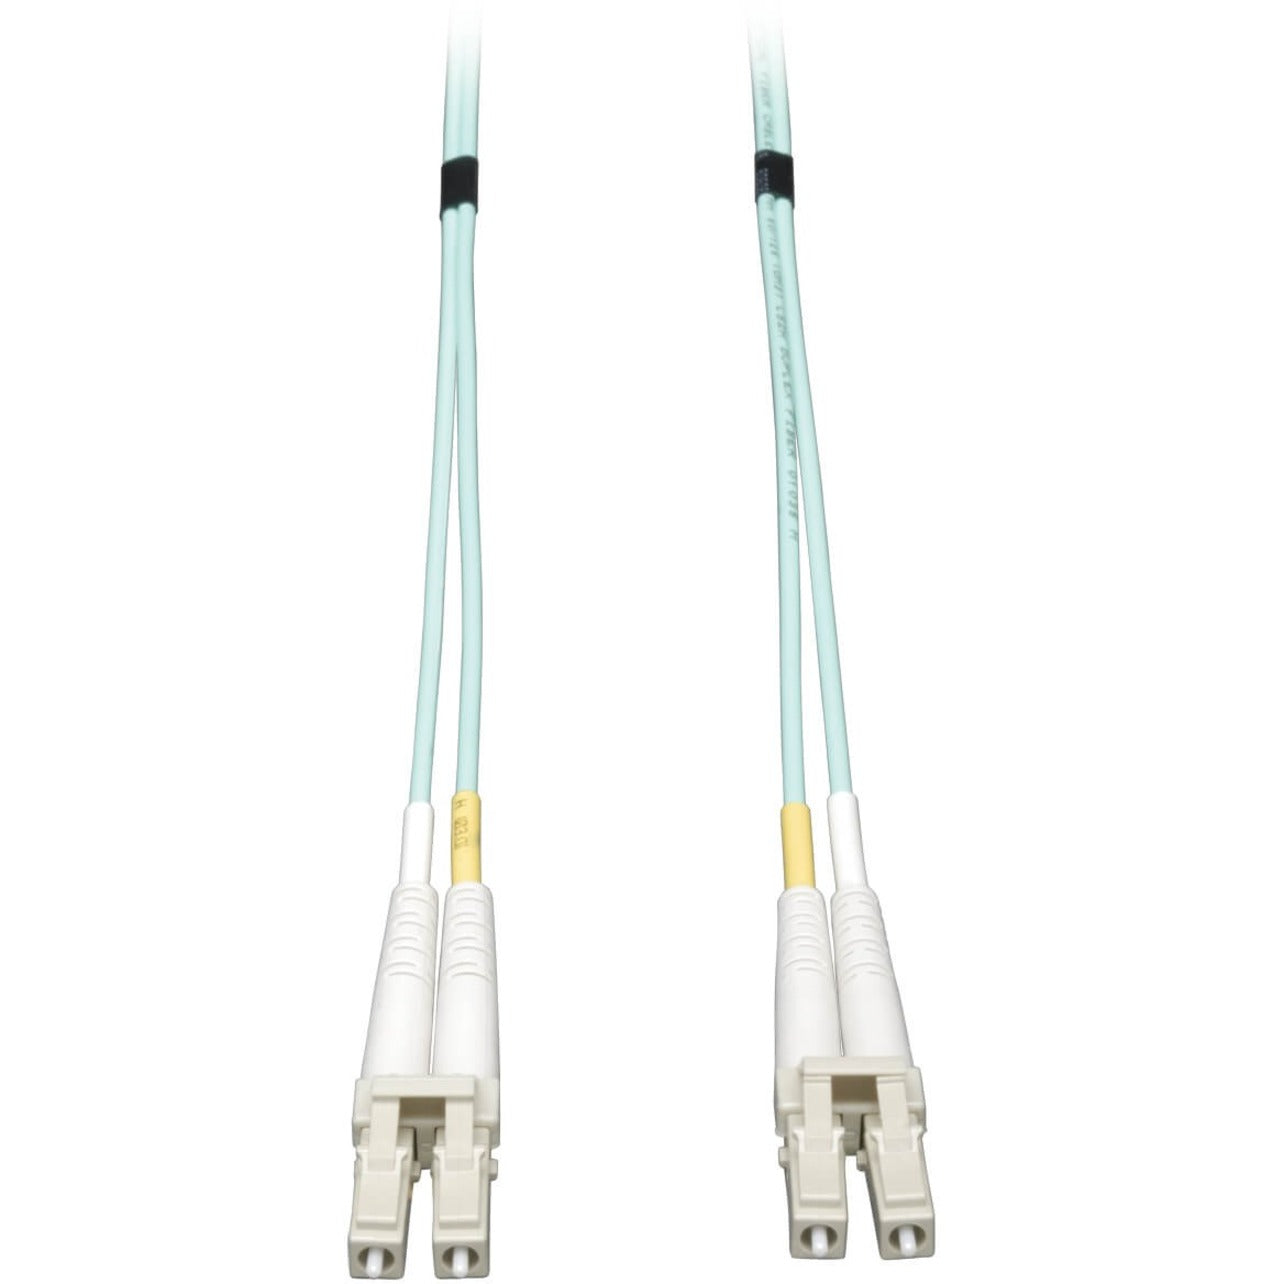 Tripp Lite N820-07M光纤补丁电缆 23英尺 多模式 水绿色 品牌名称： Tripp Lite 翻译品牌名称： 特力皮